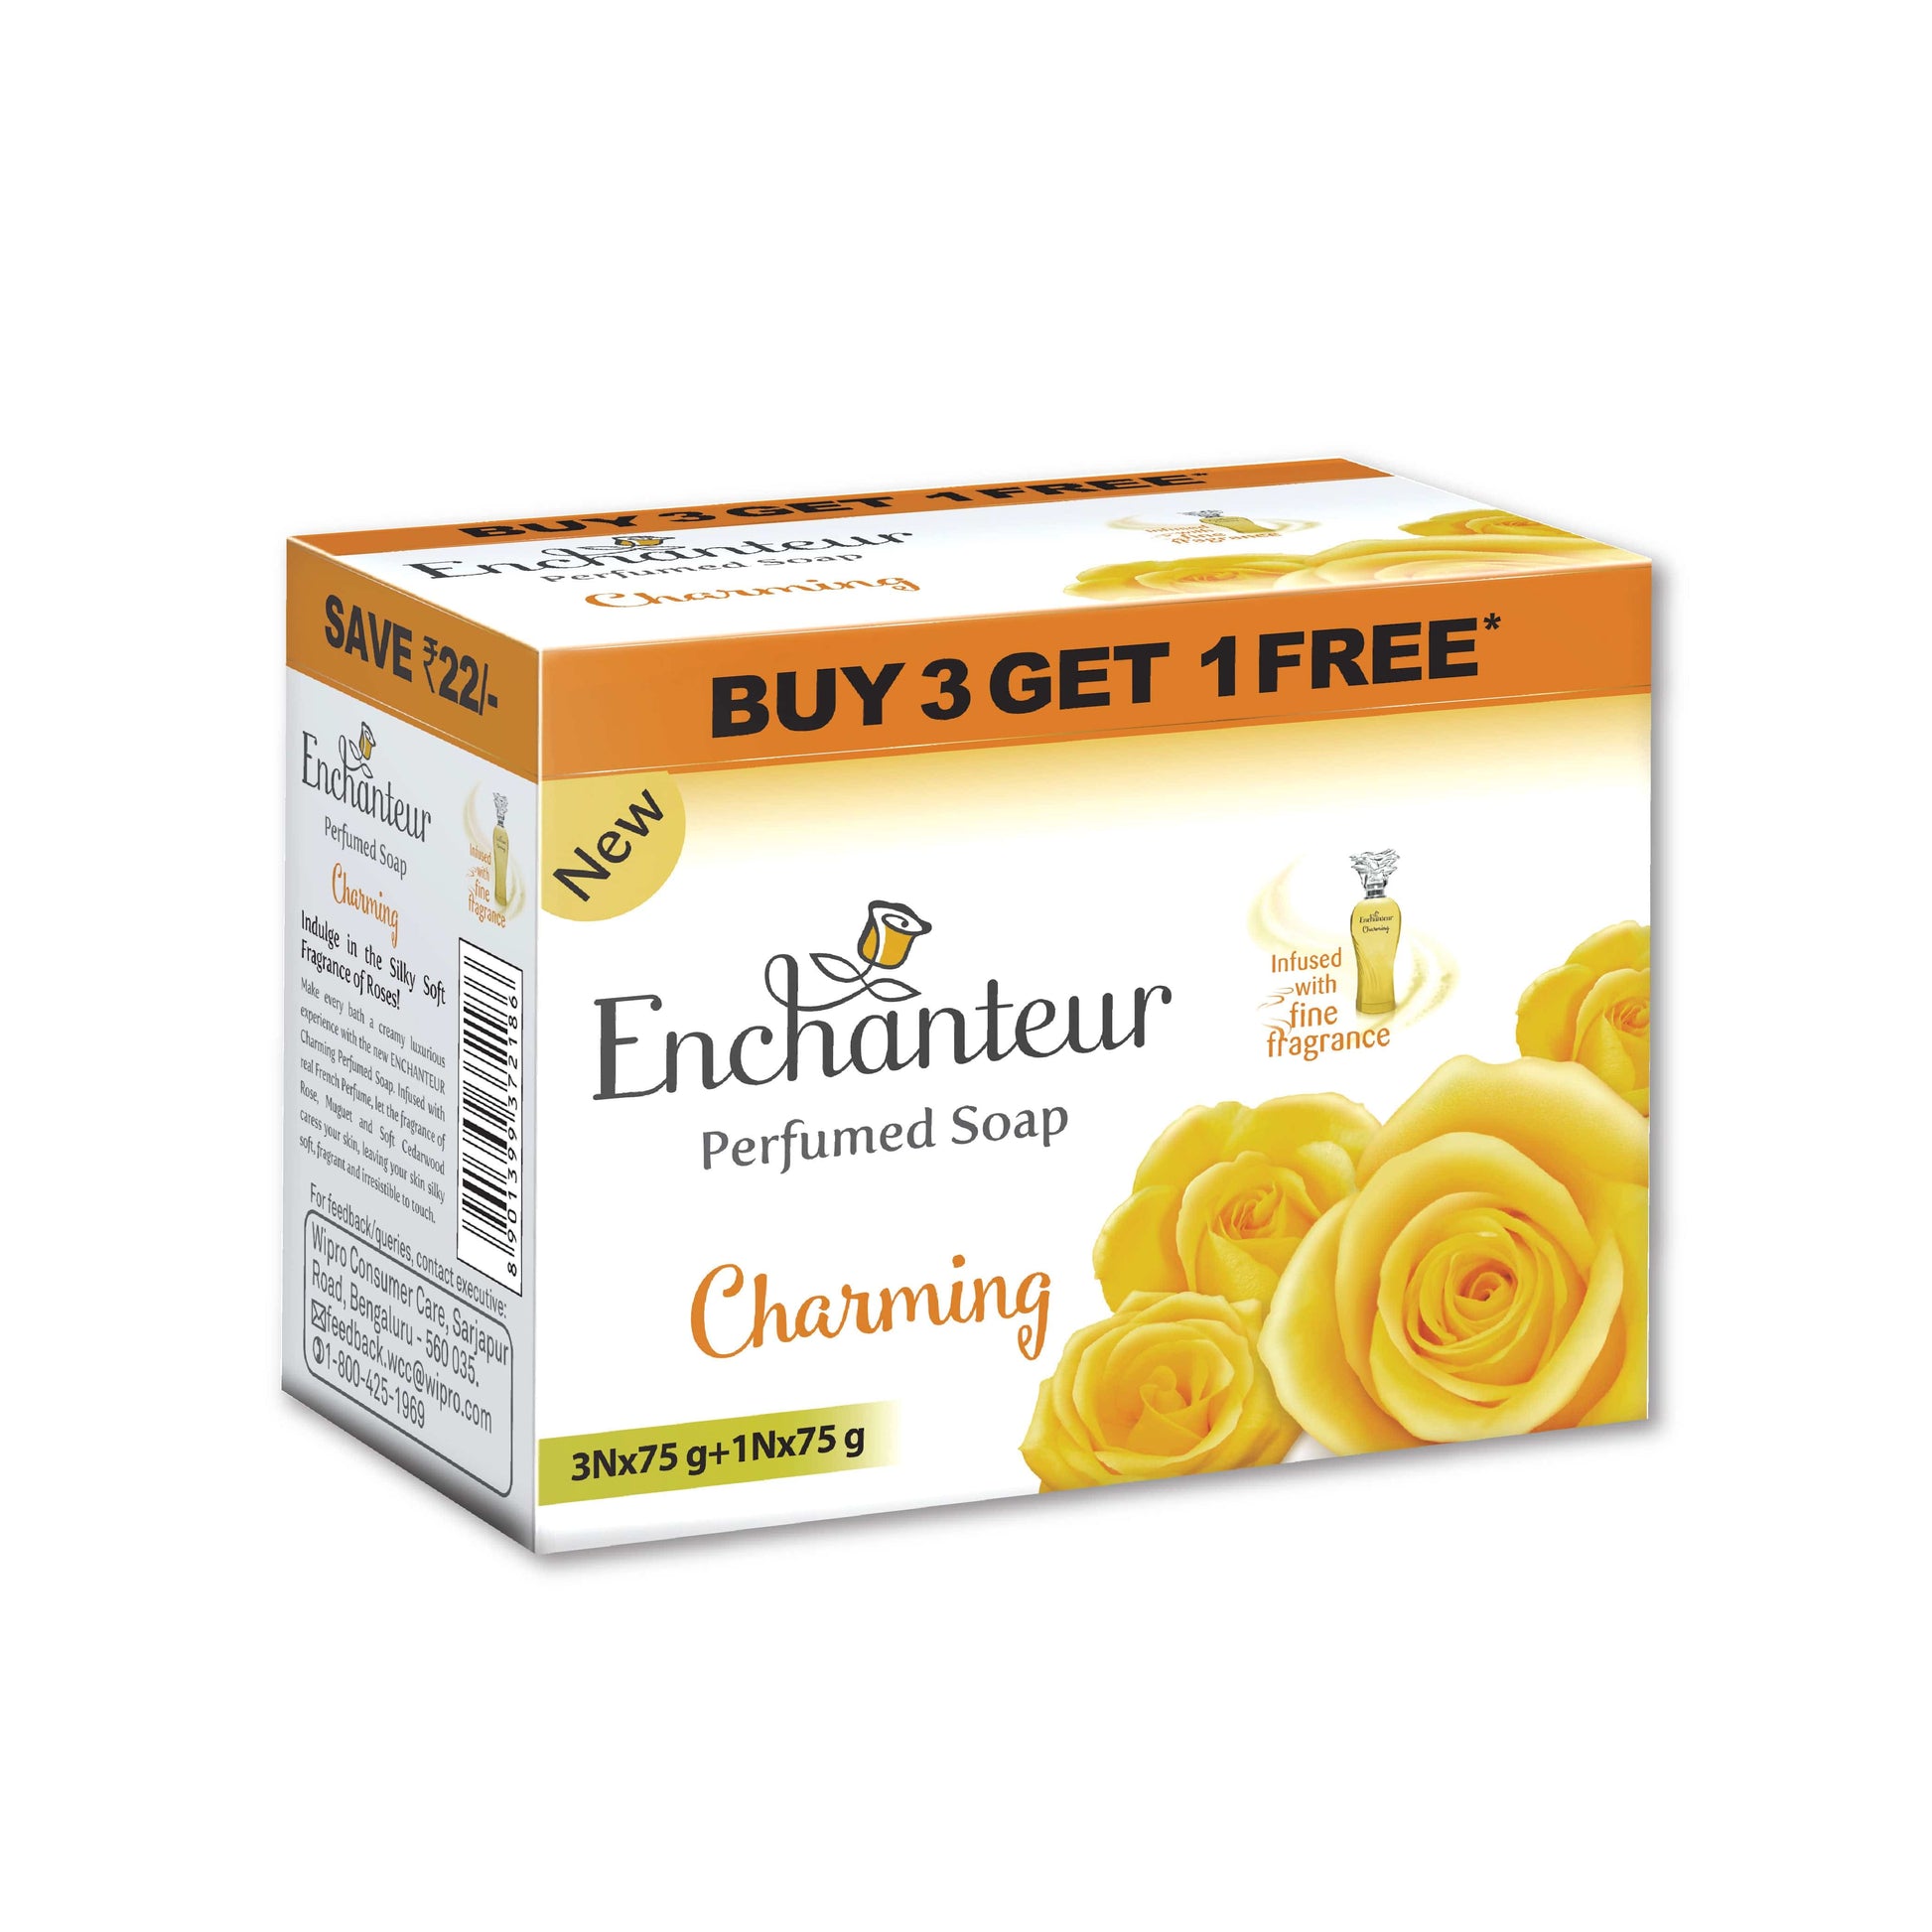 Enchanteur Perfumed Charming Bathing Soap Bar, Pack of 3+1